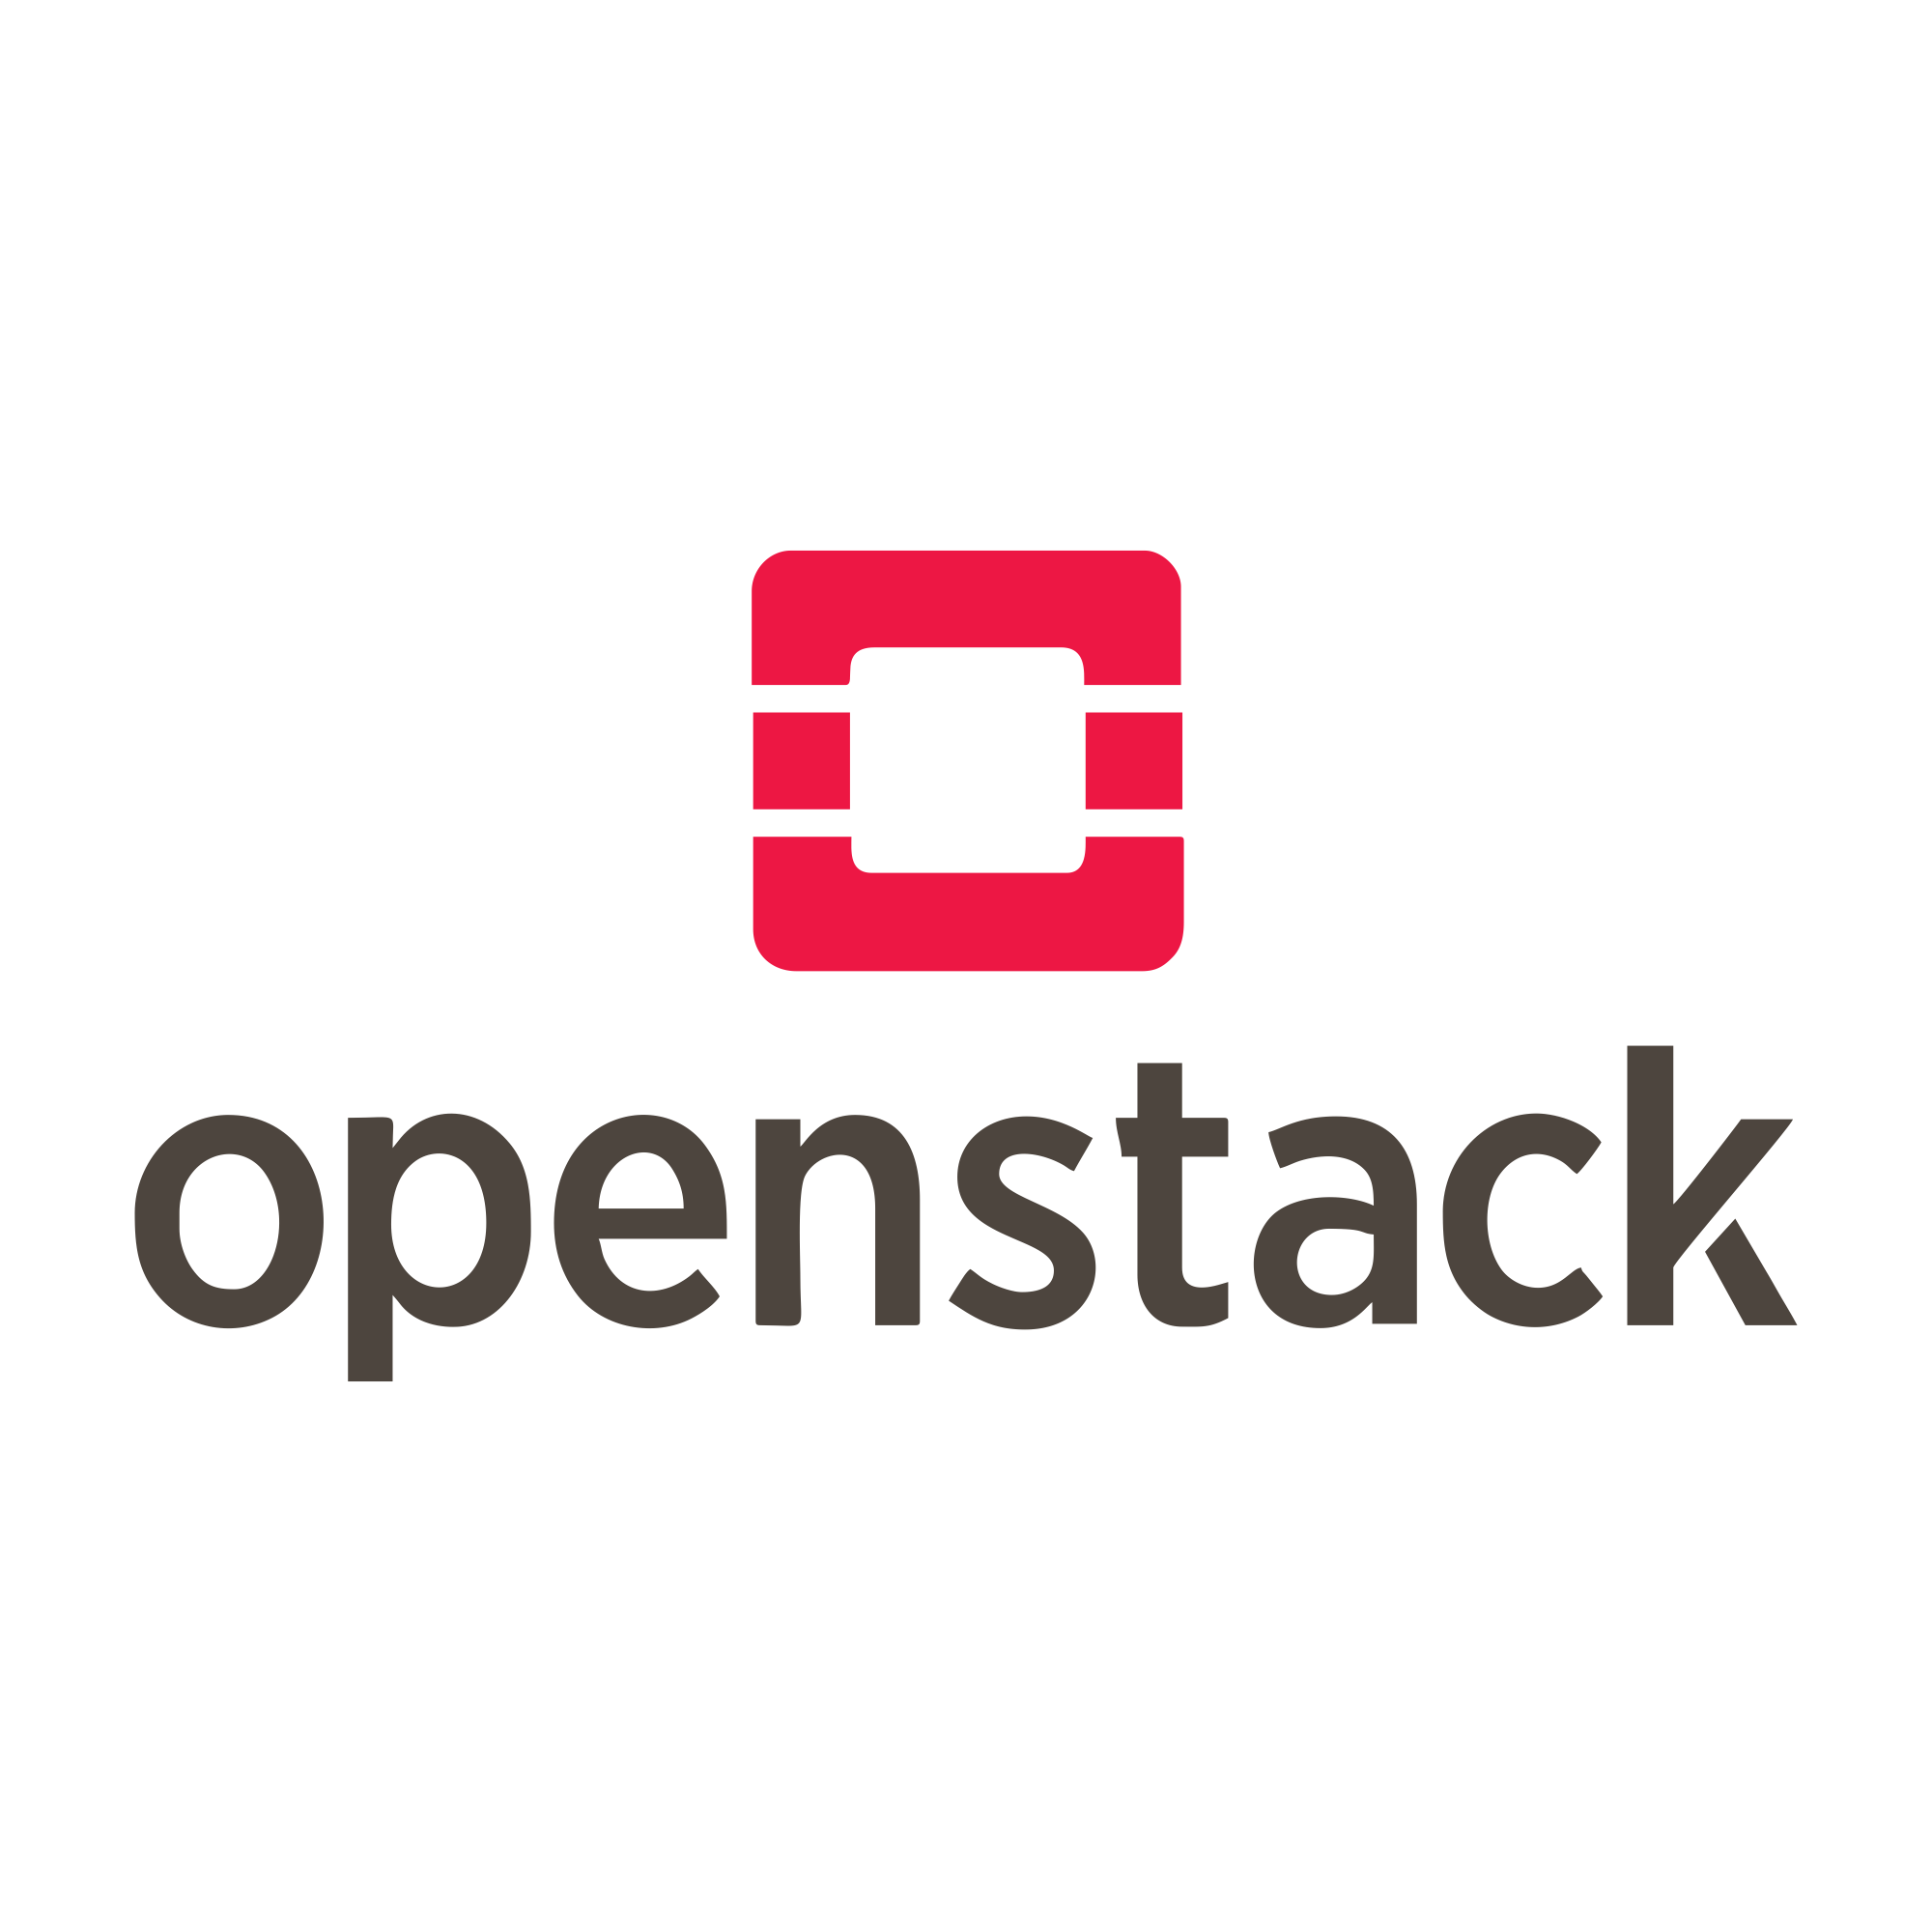 Openstack Private Cloud